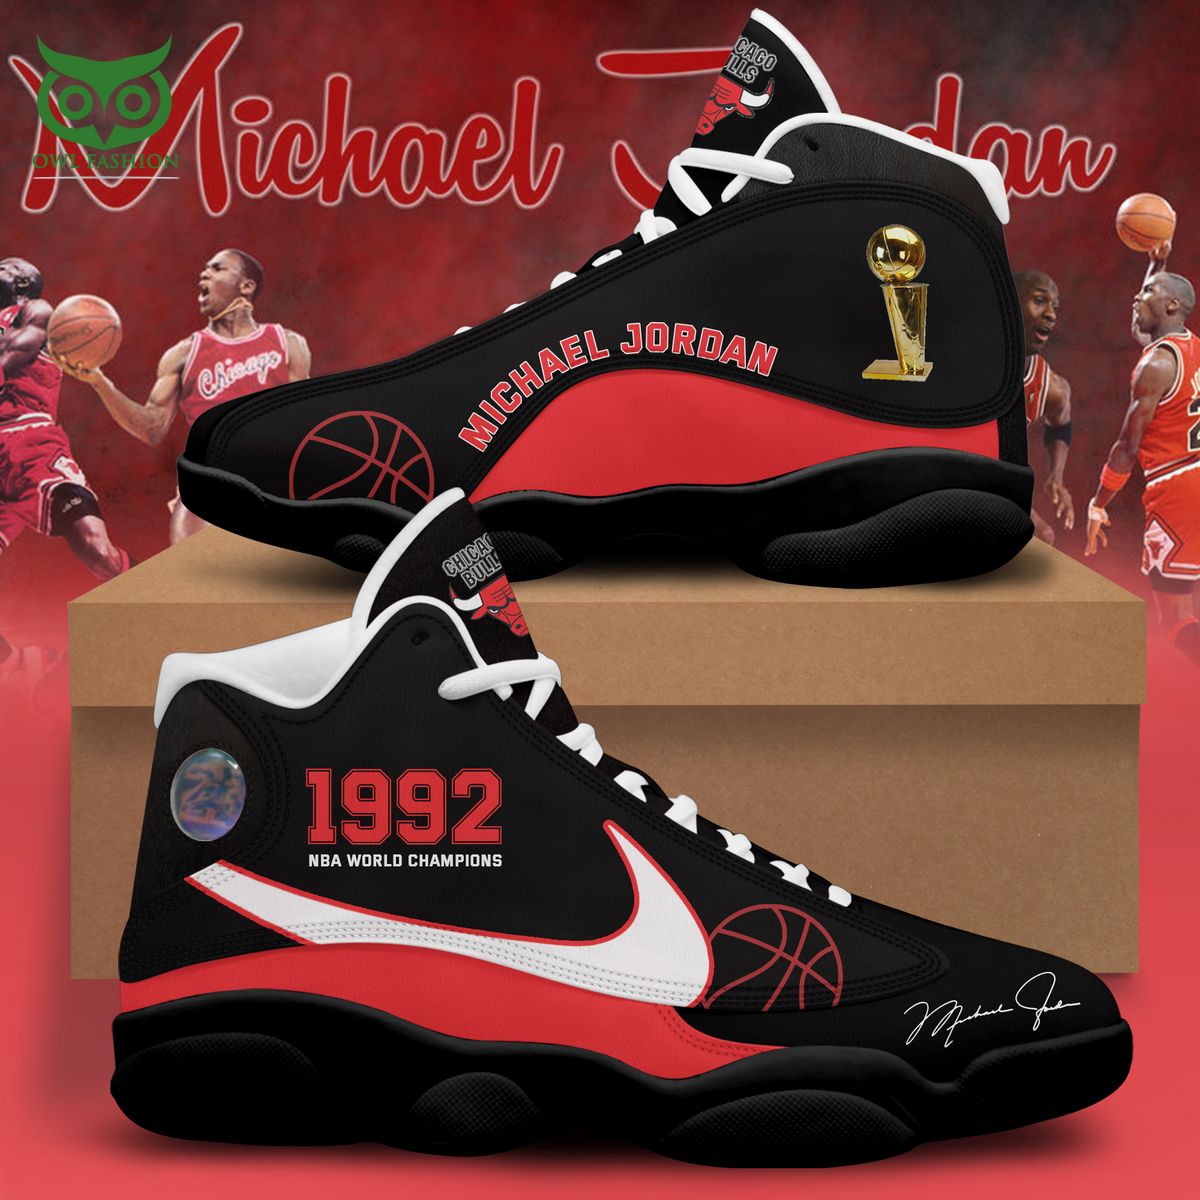 Michael Jordan 1992 World Champtions Nike Air Jordan 13 Cuteness overloaded